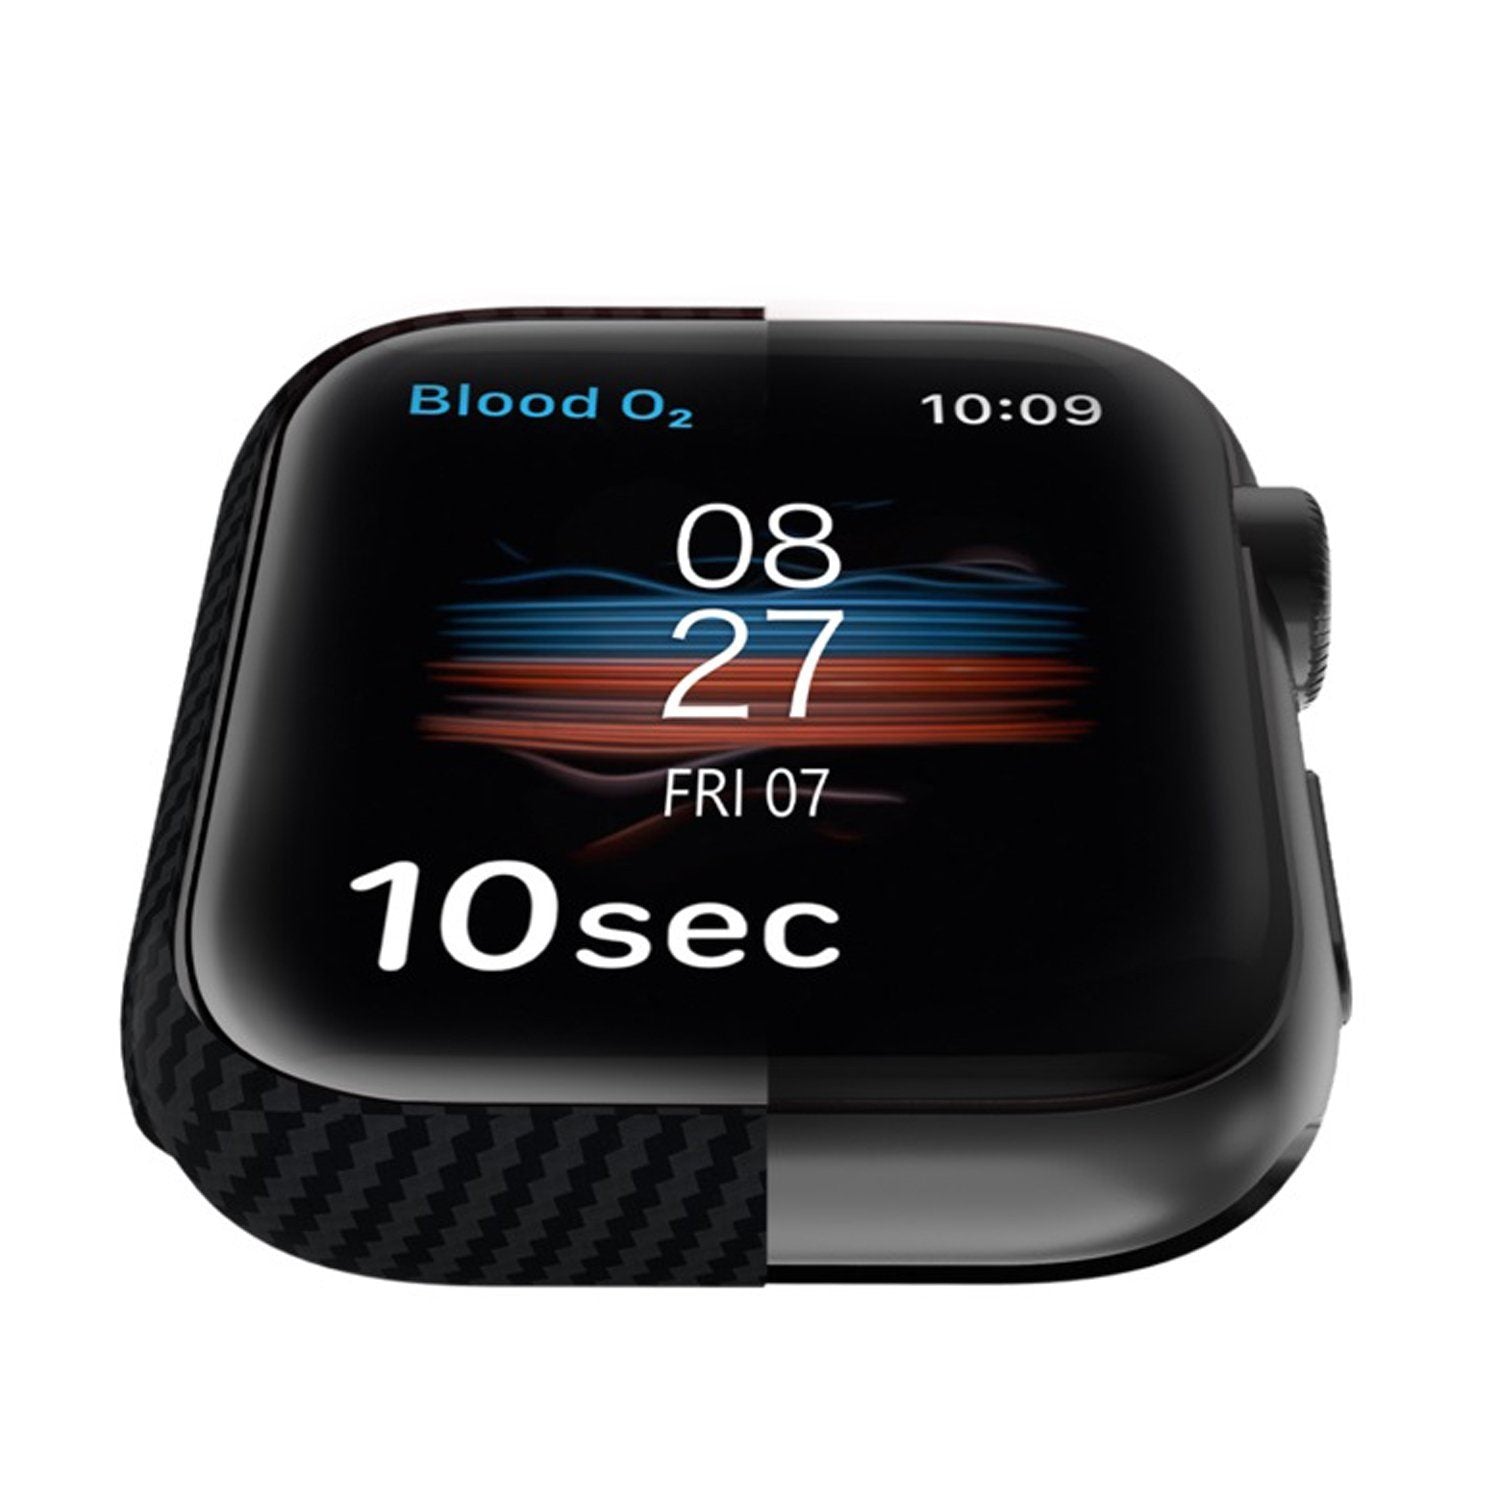 PITAKA Aramid Fiber Air Case For Apple Watch Series SE/6/5/4 40mm, Black/Grey Twill Default PITAKA 